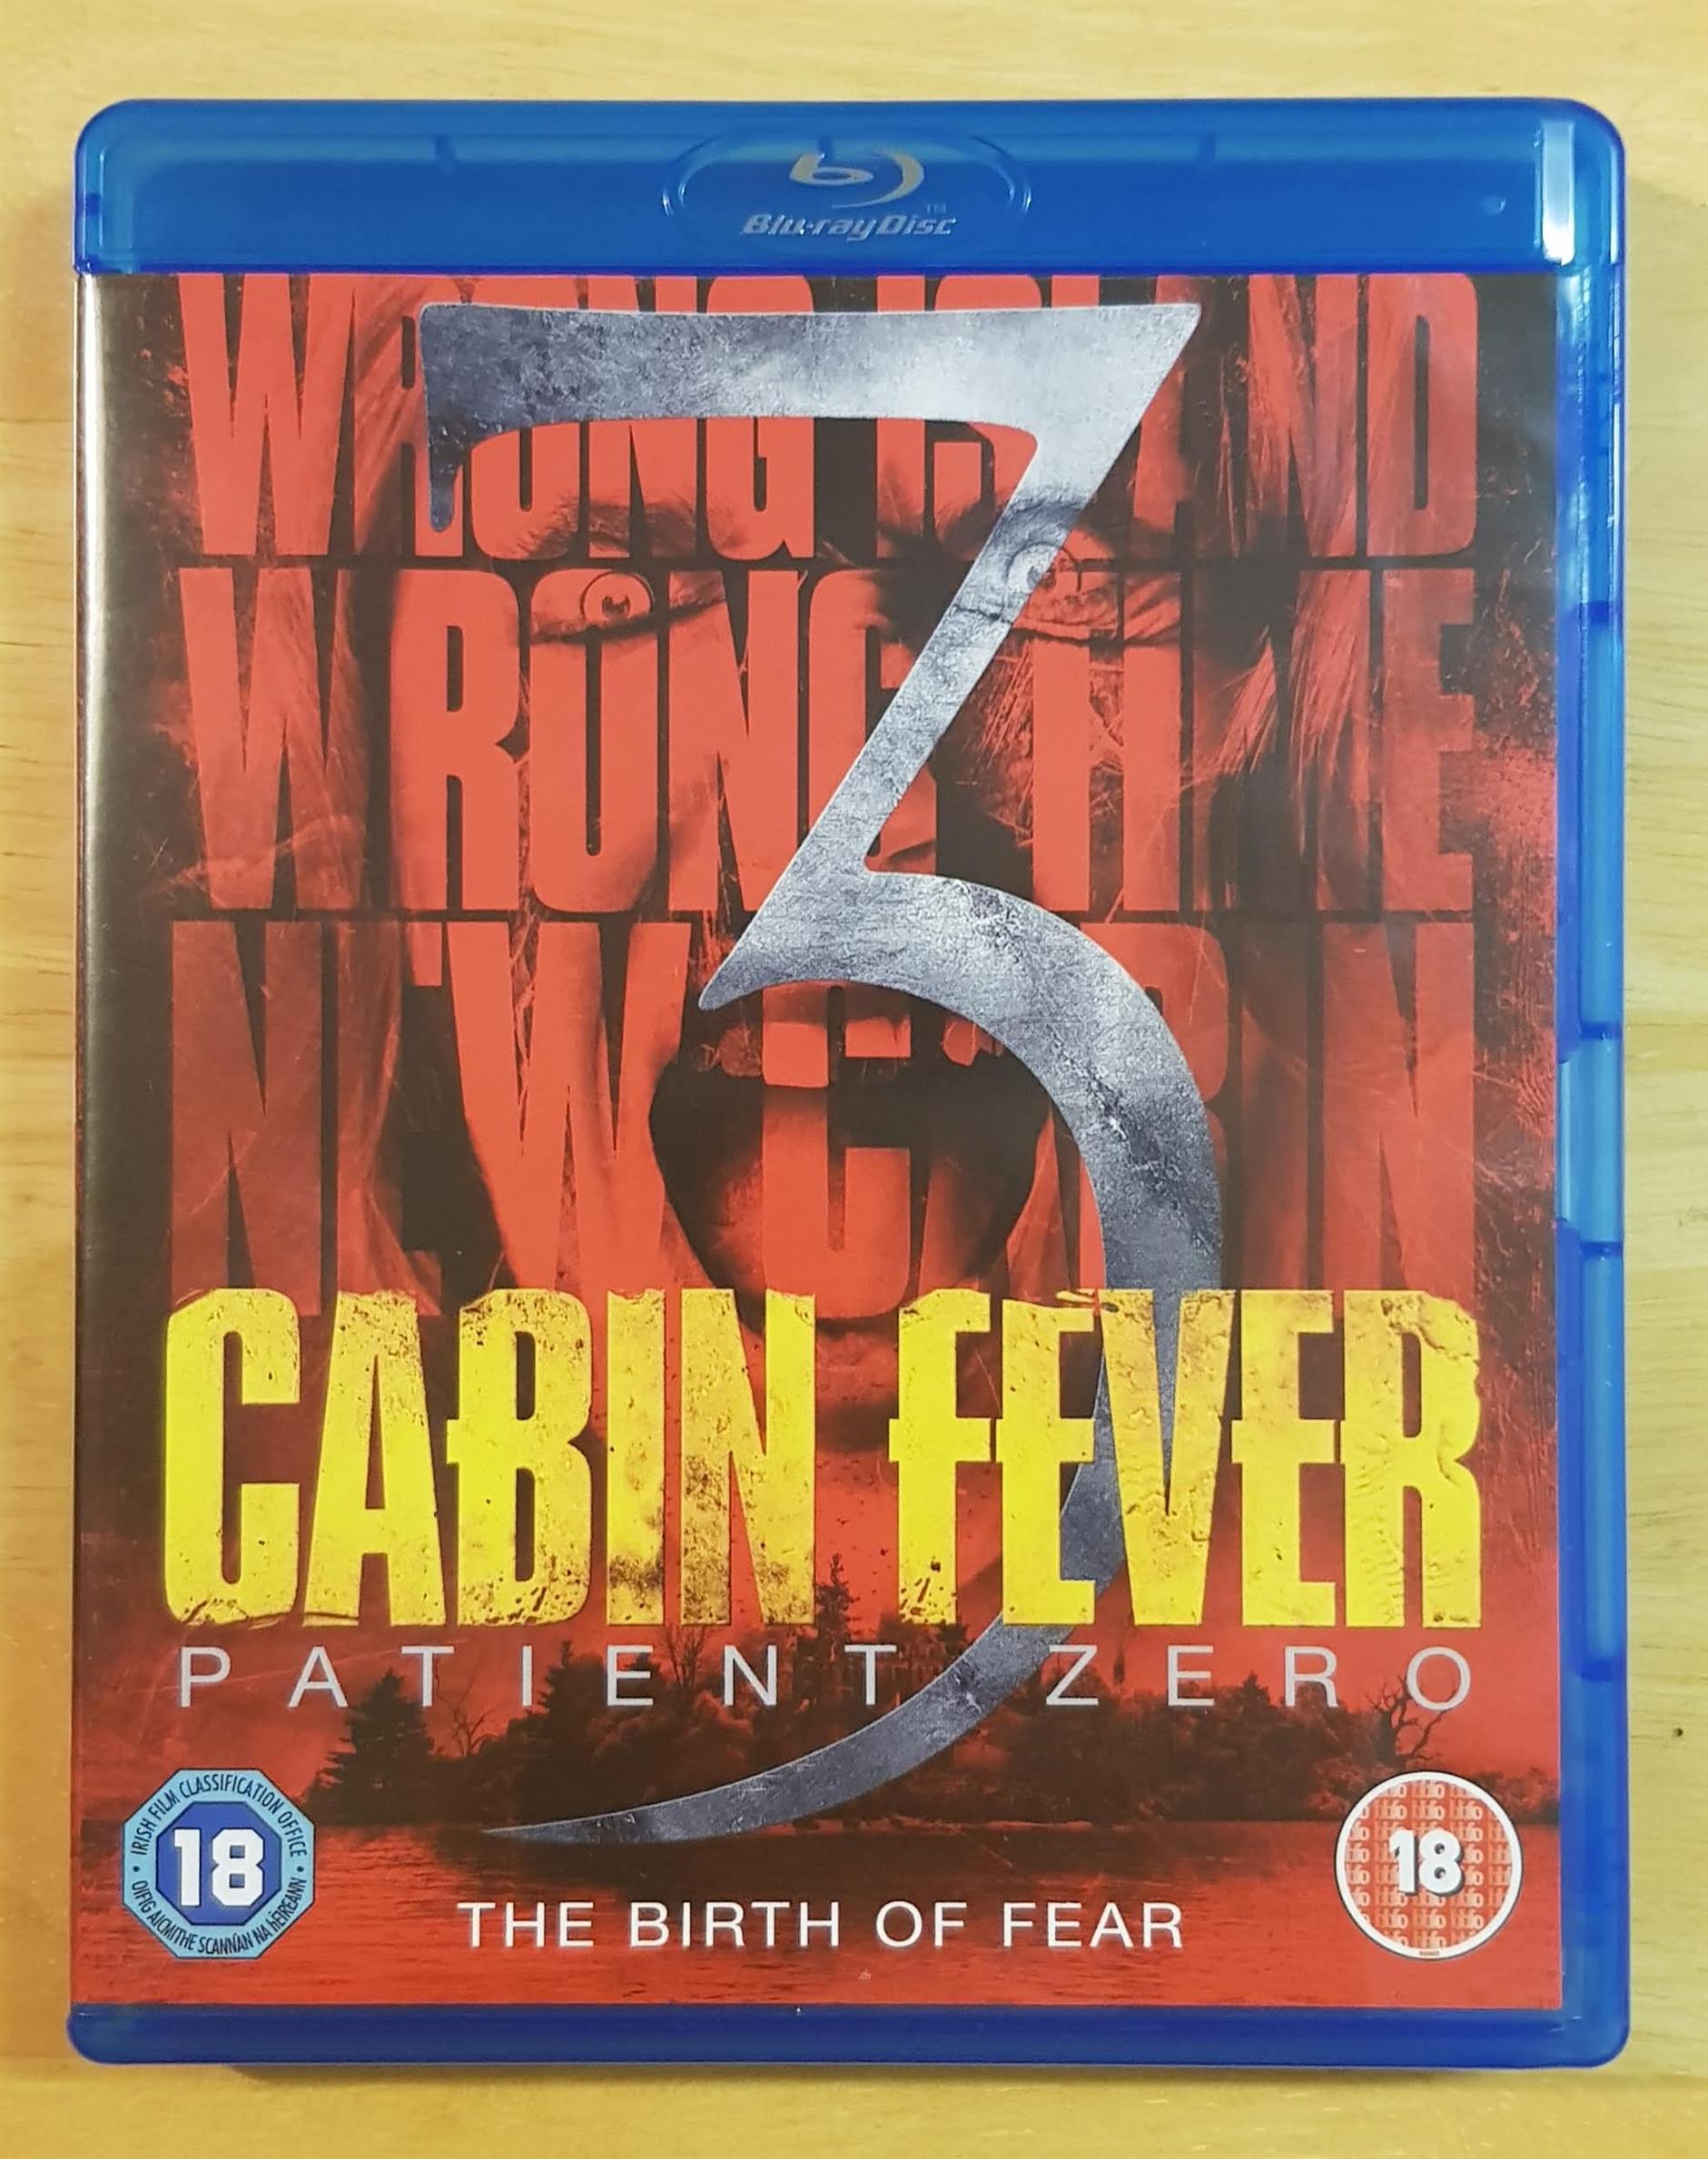 cabin fever 3 released